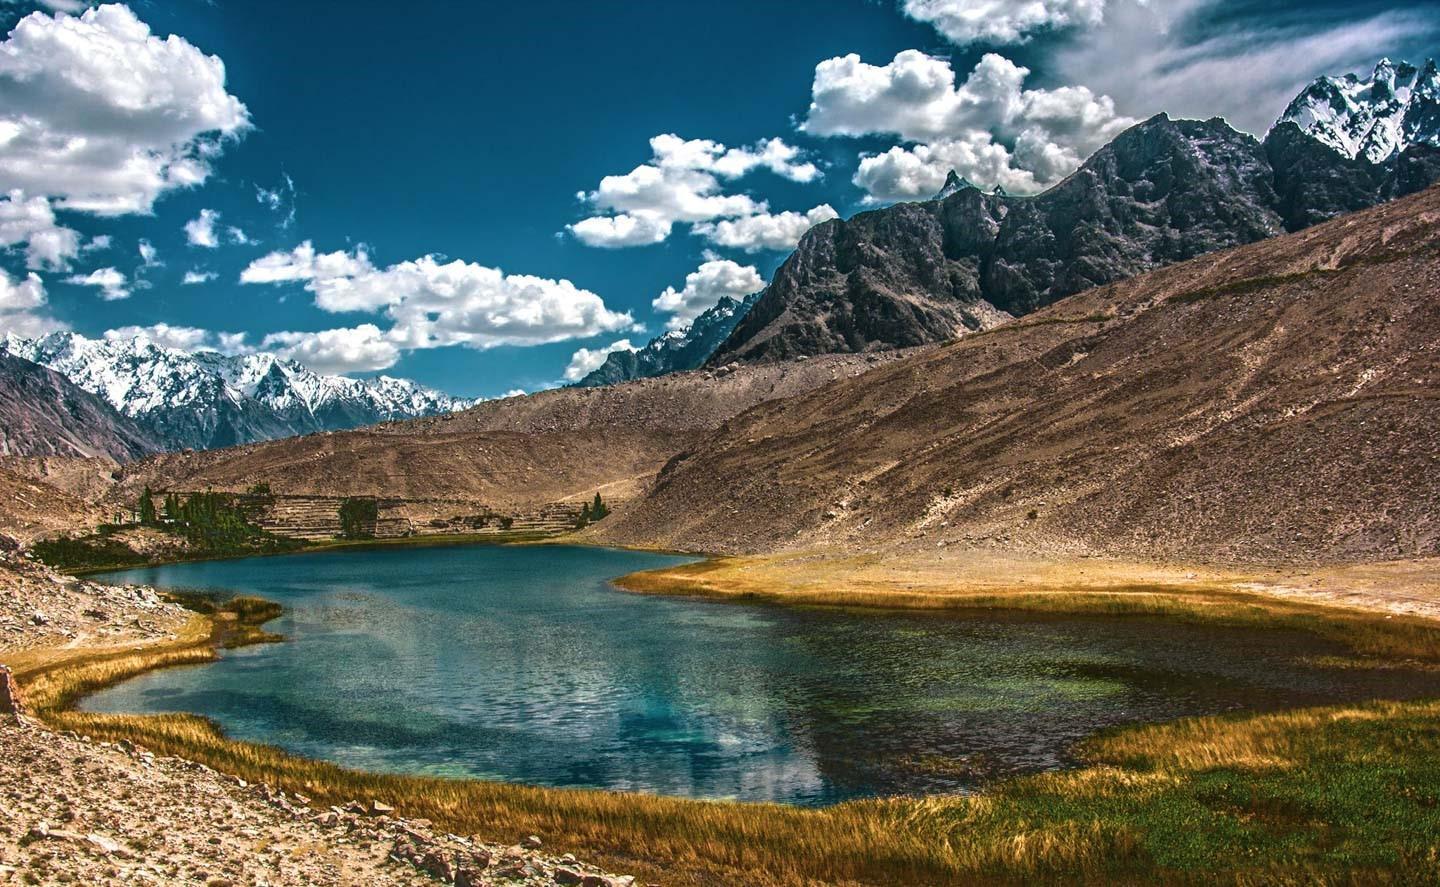 Borith Lake, a hamlet in Gulmit, Gojal District, Gilgit Baltistan